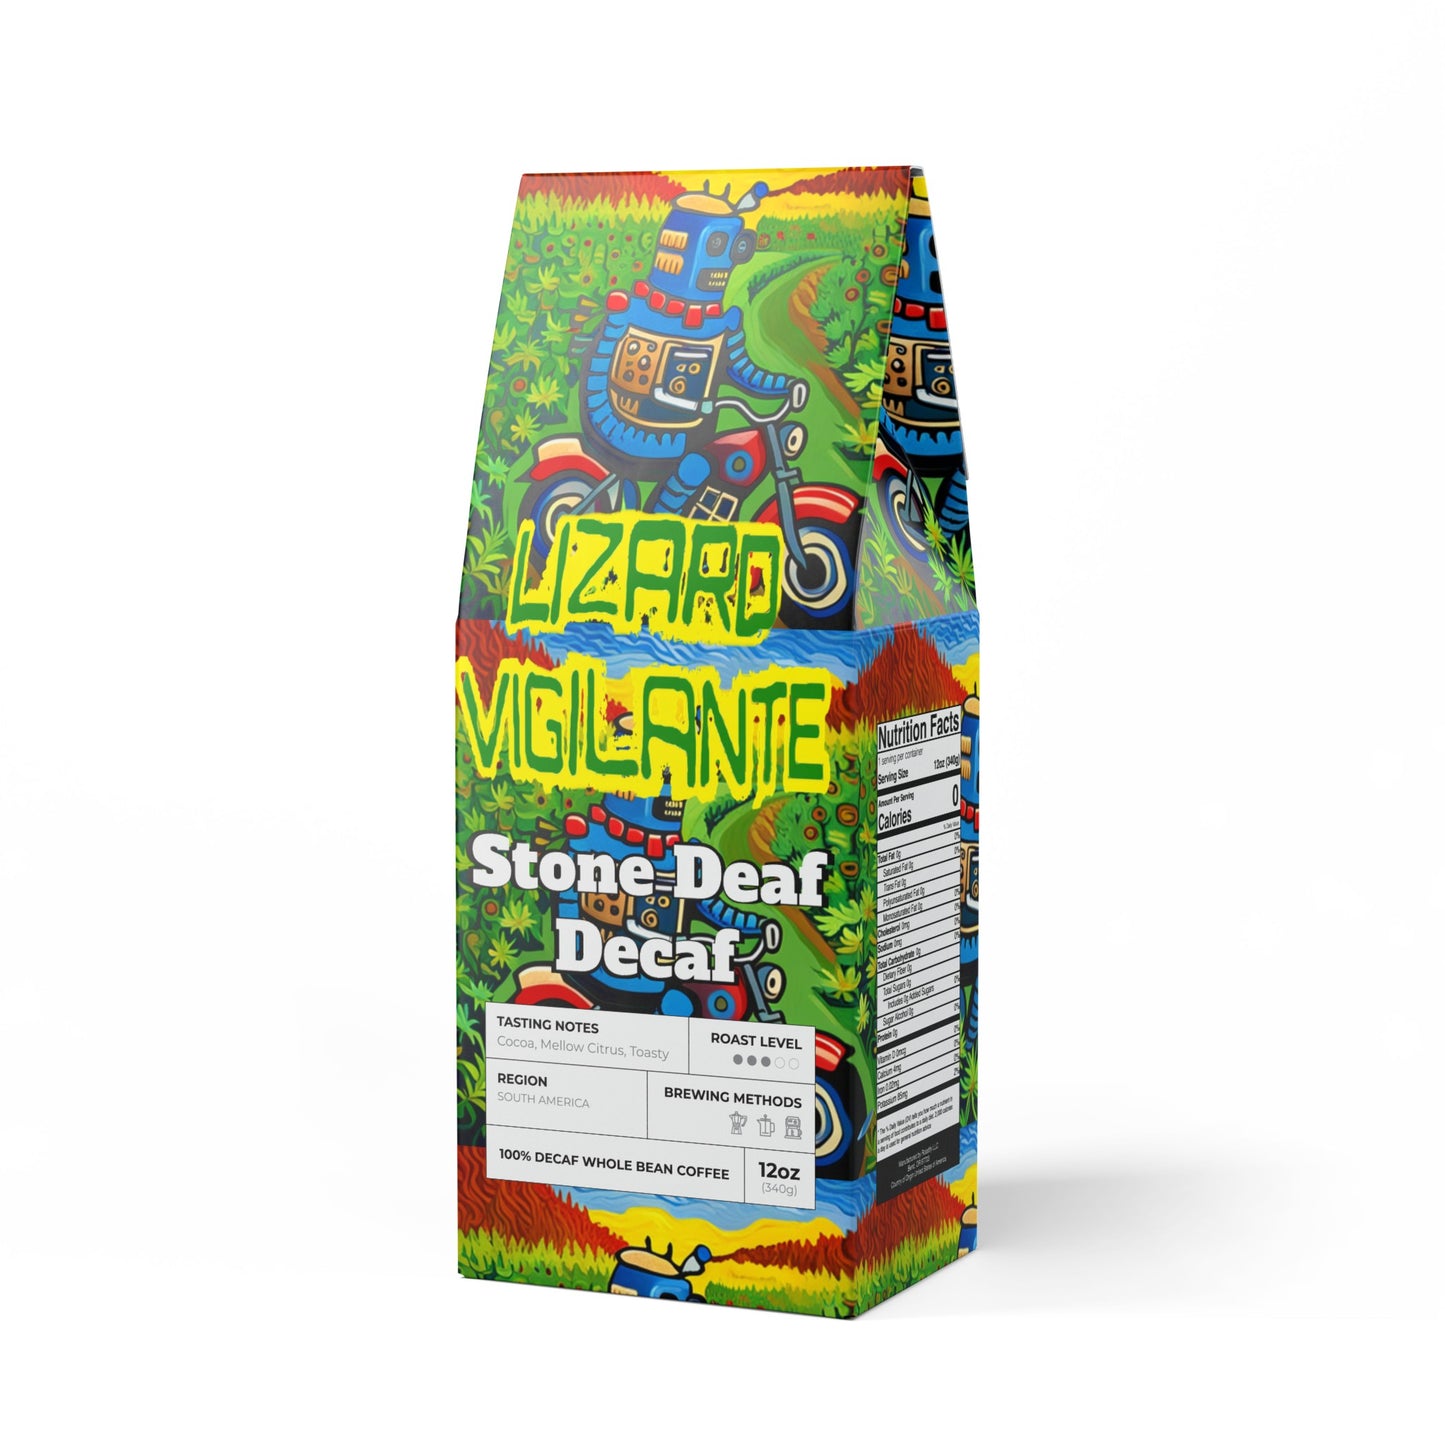 Lizard Vigilante Stone Deaf Decaf Premium Coffee Blend (Medium Roast) - Subscription Plans Available at Discount! - Lizard Vigilante